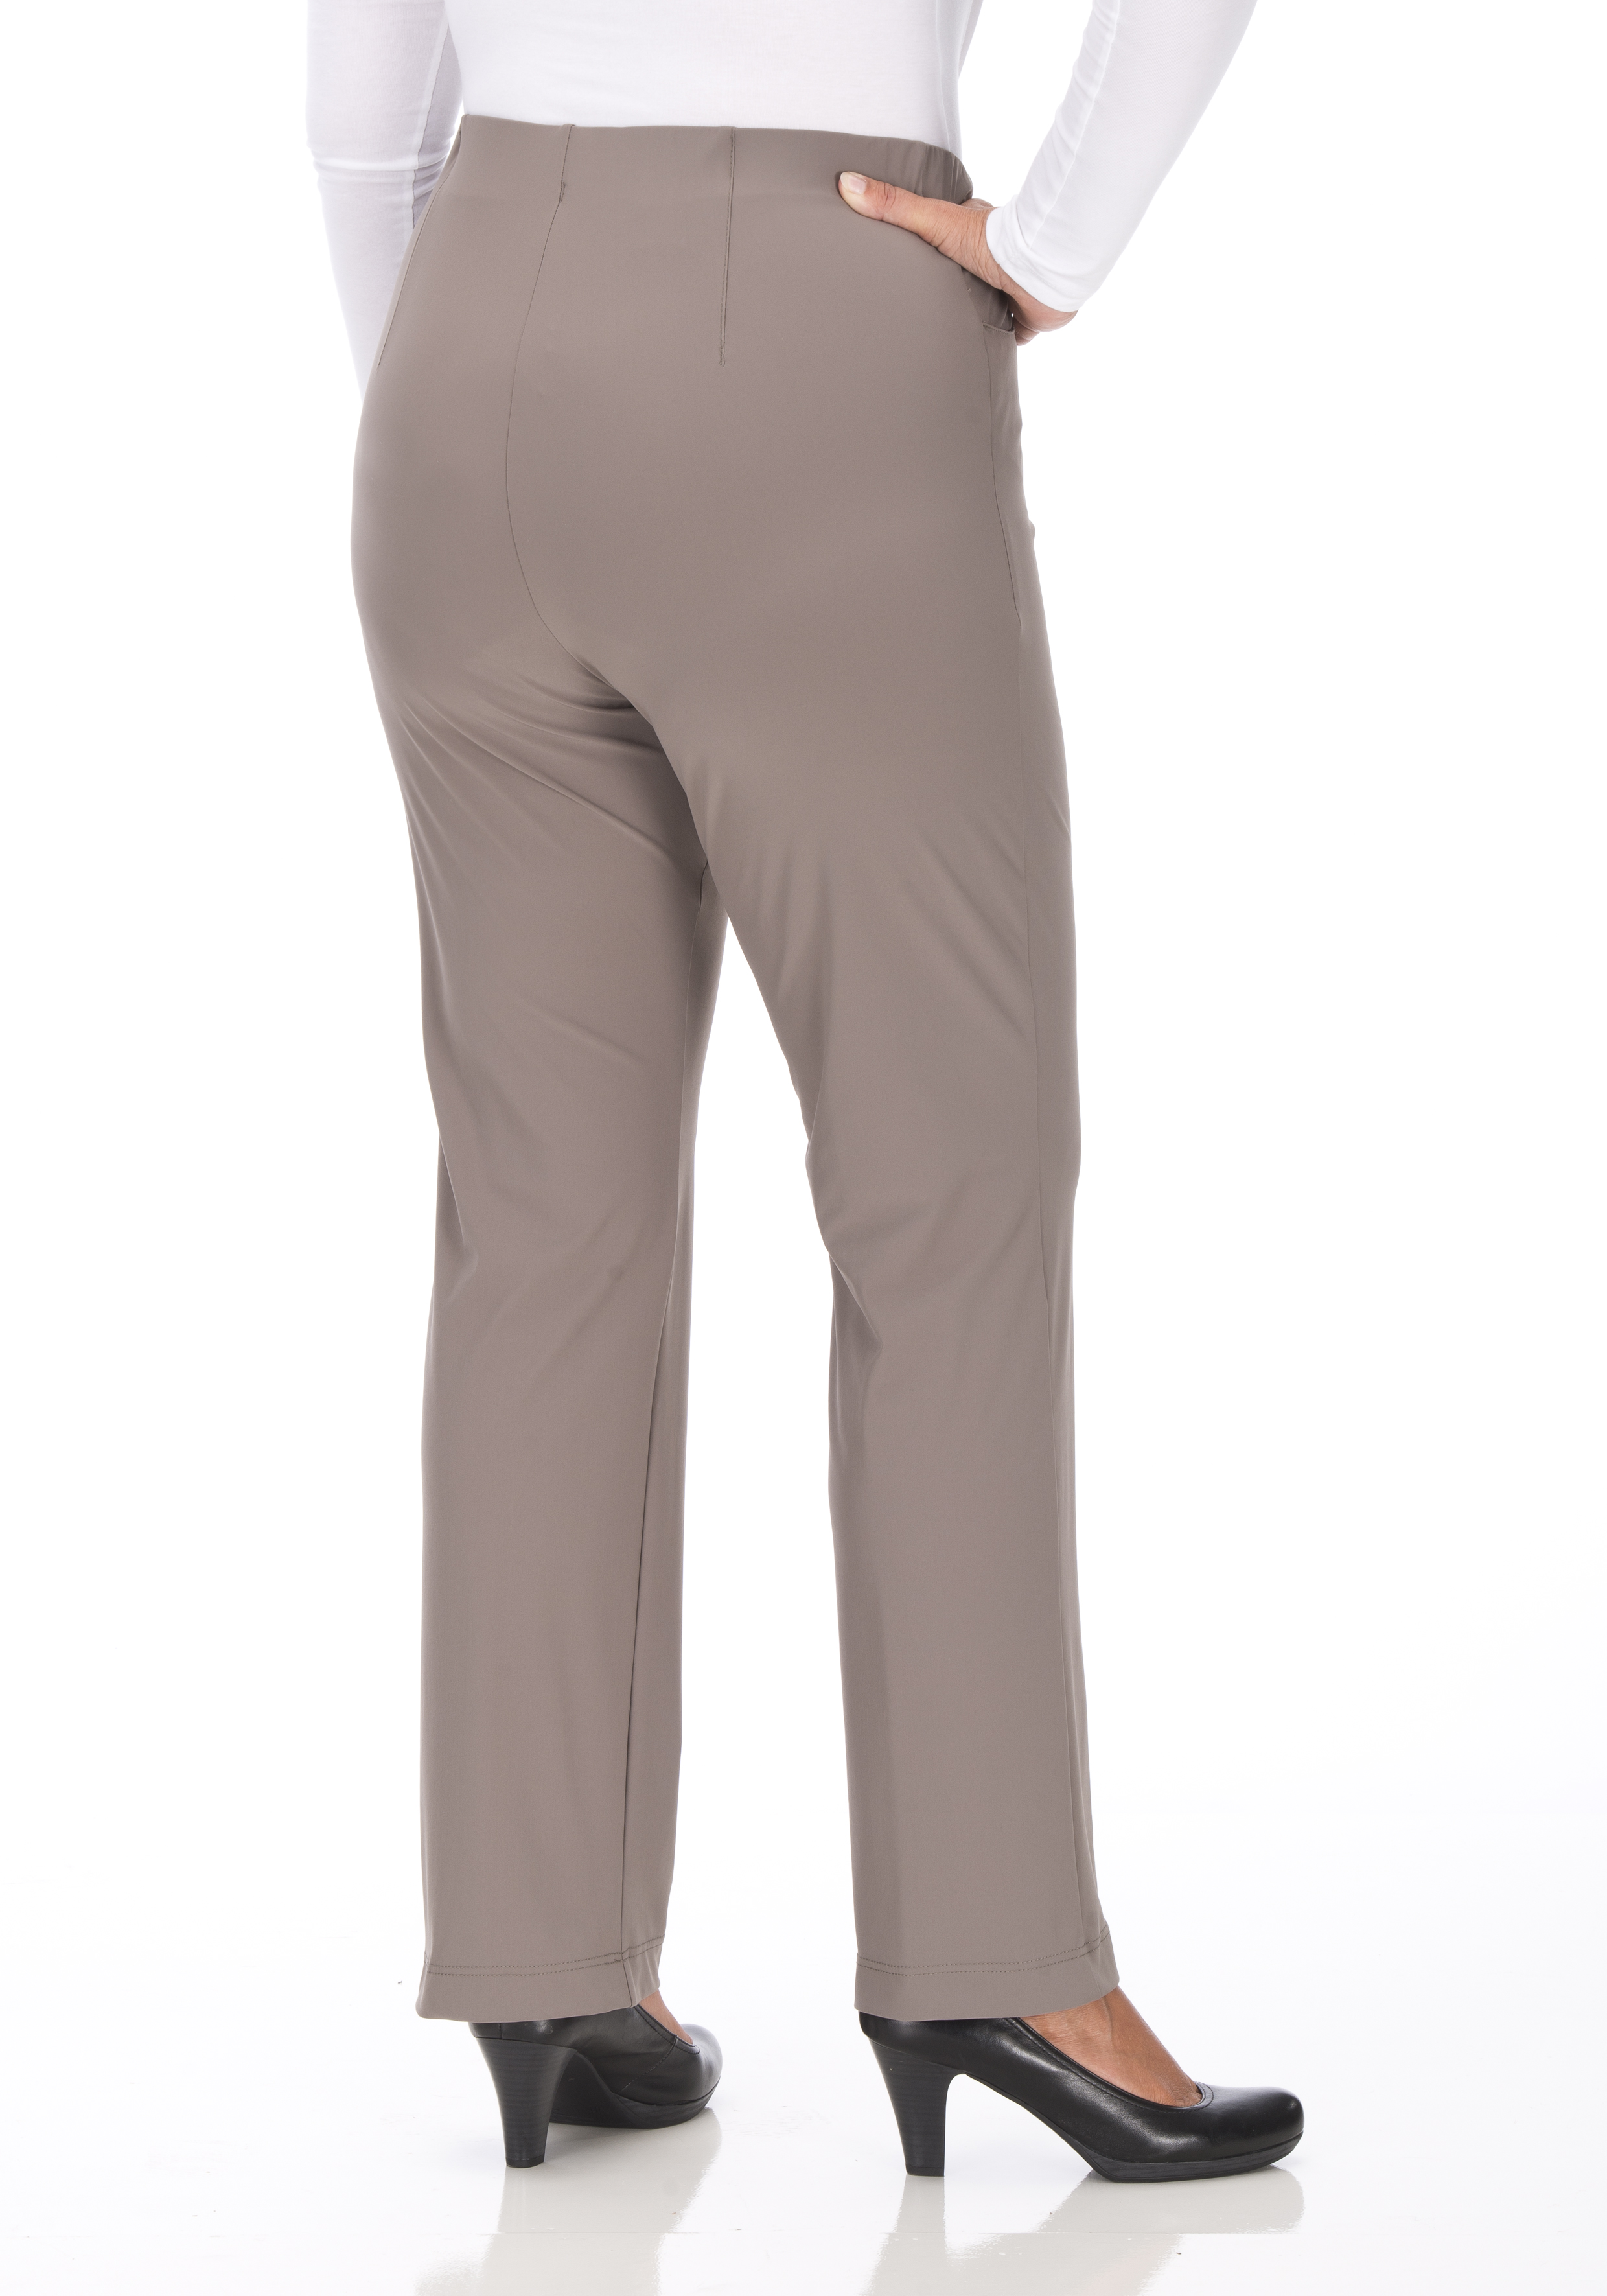 KjBRAND pants sensitive Curvy SUSIE - by BiNA winter long quality